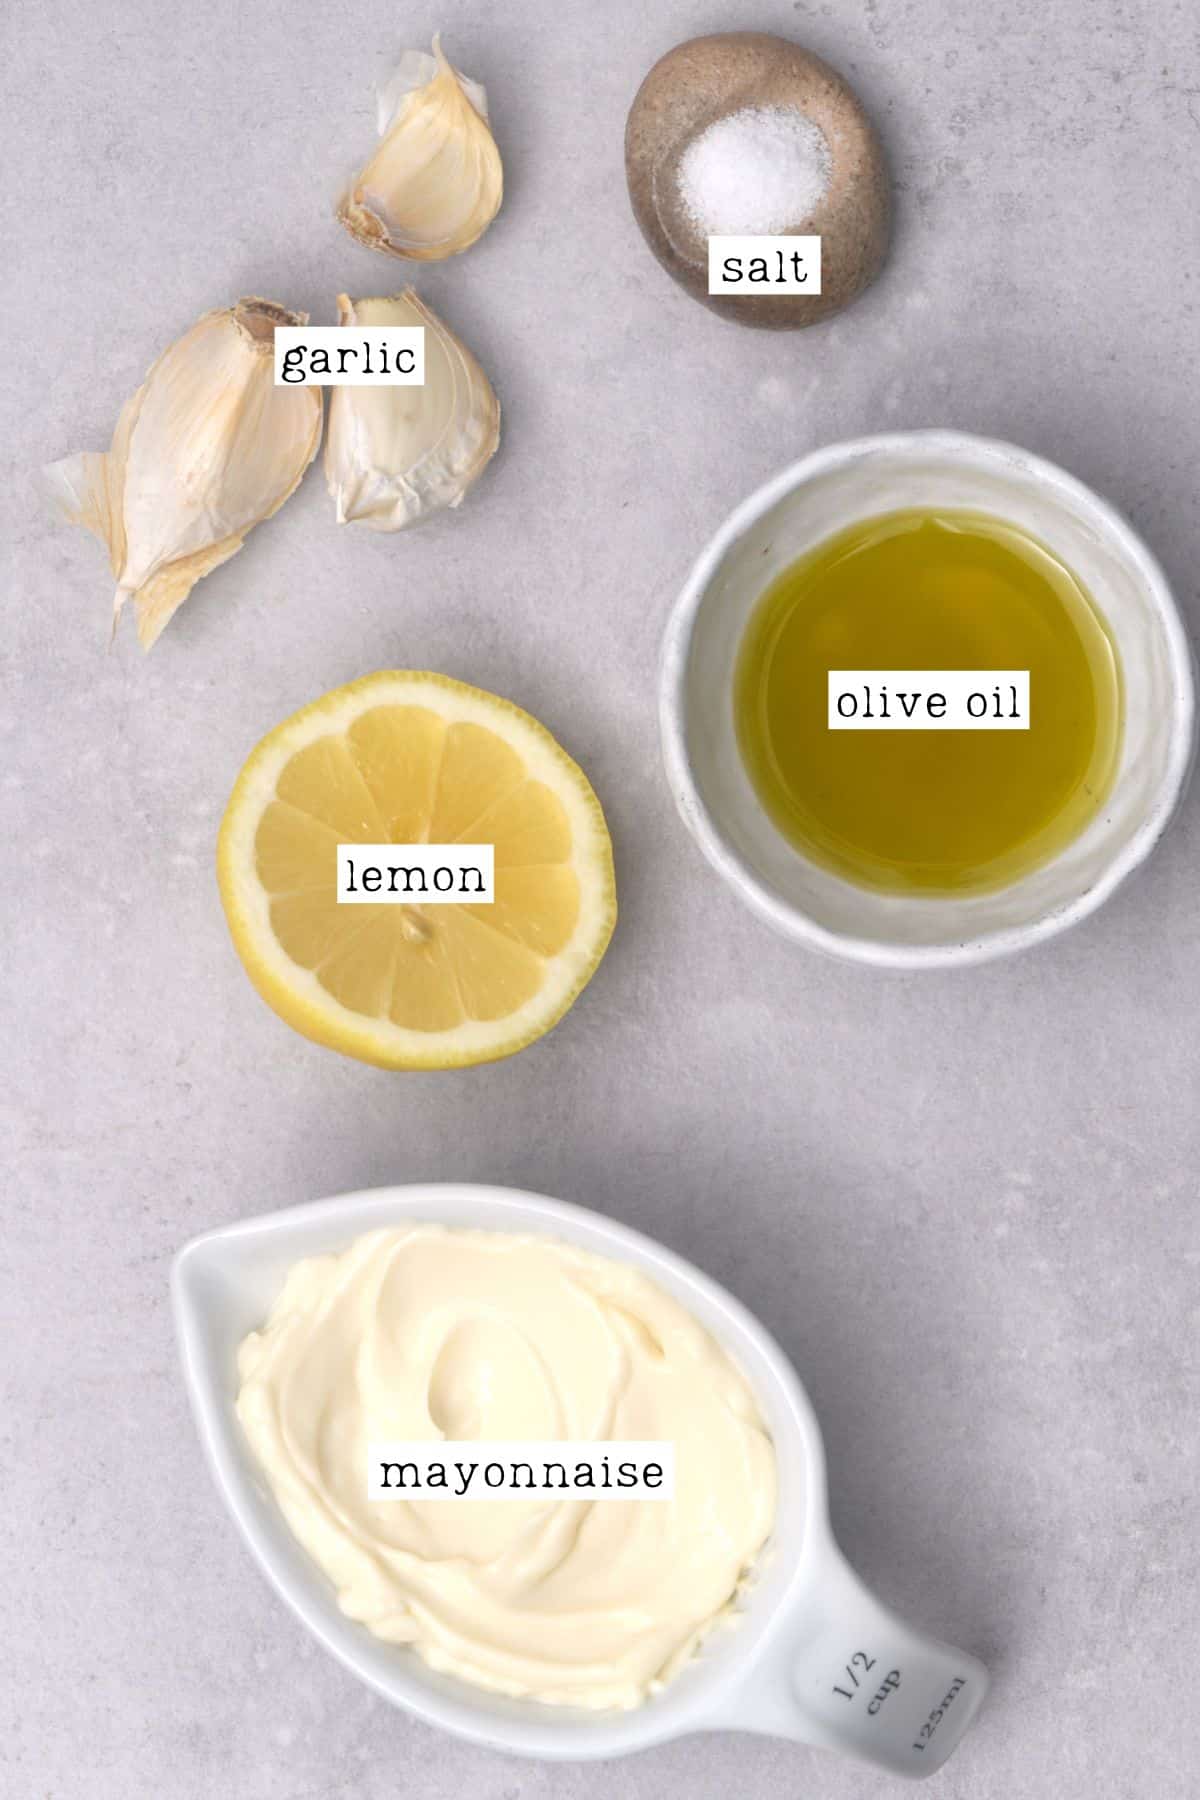 Ingredients for garlic aioli